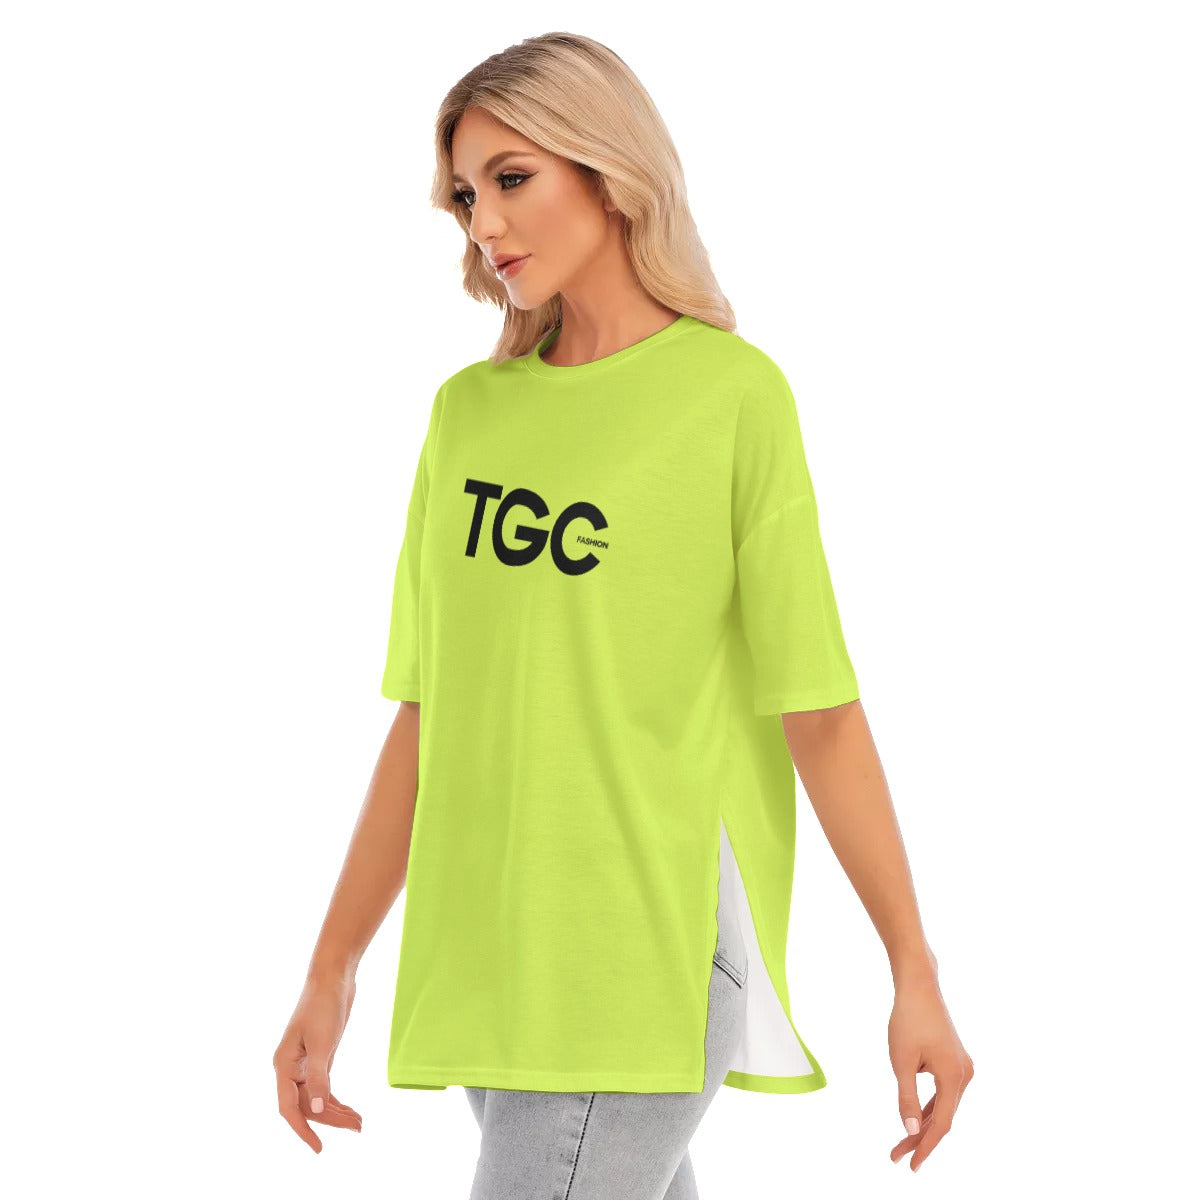 TGC Fashion official T-shirt